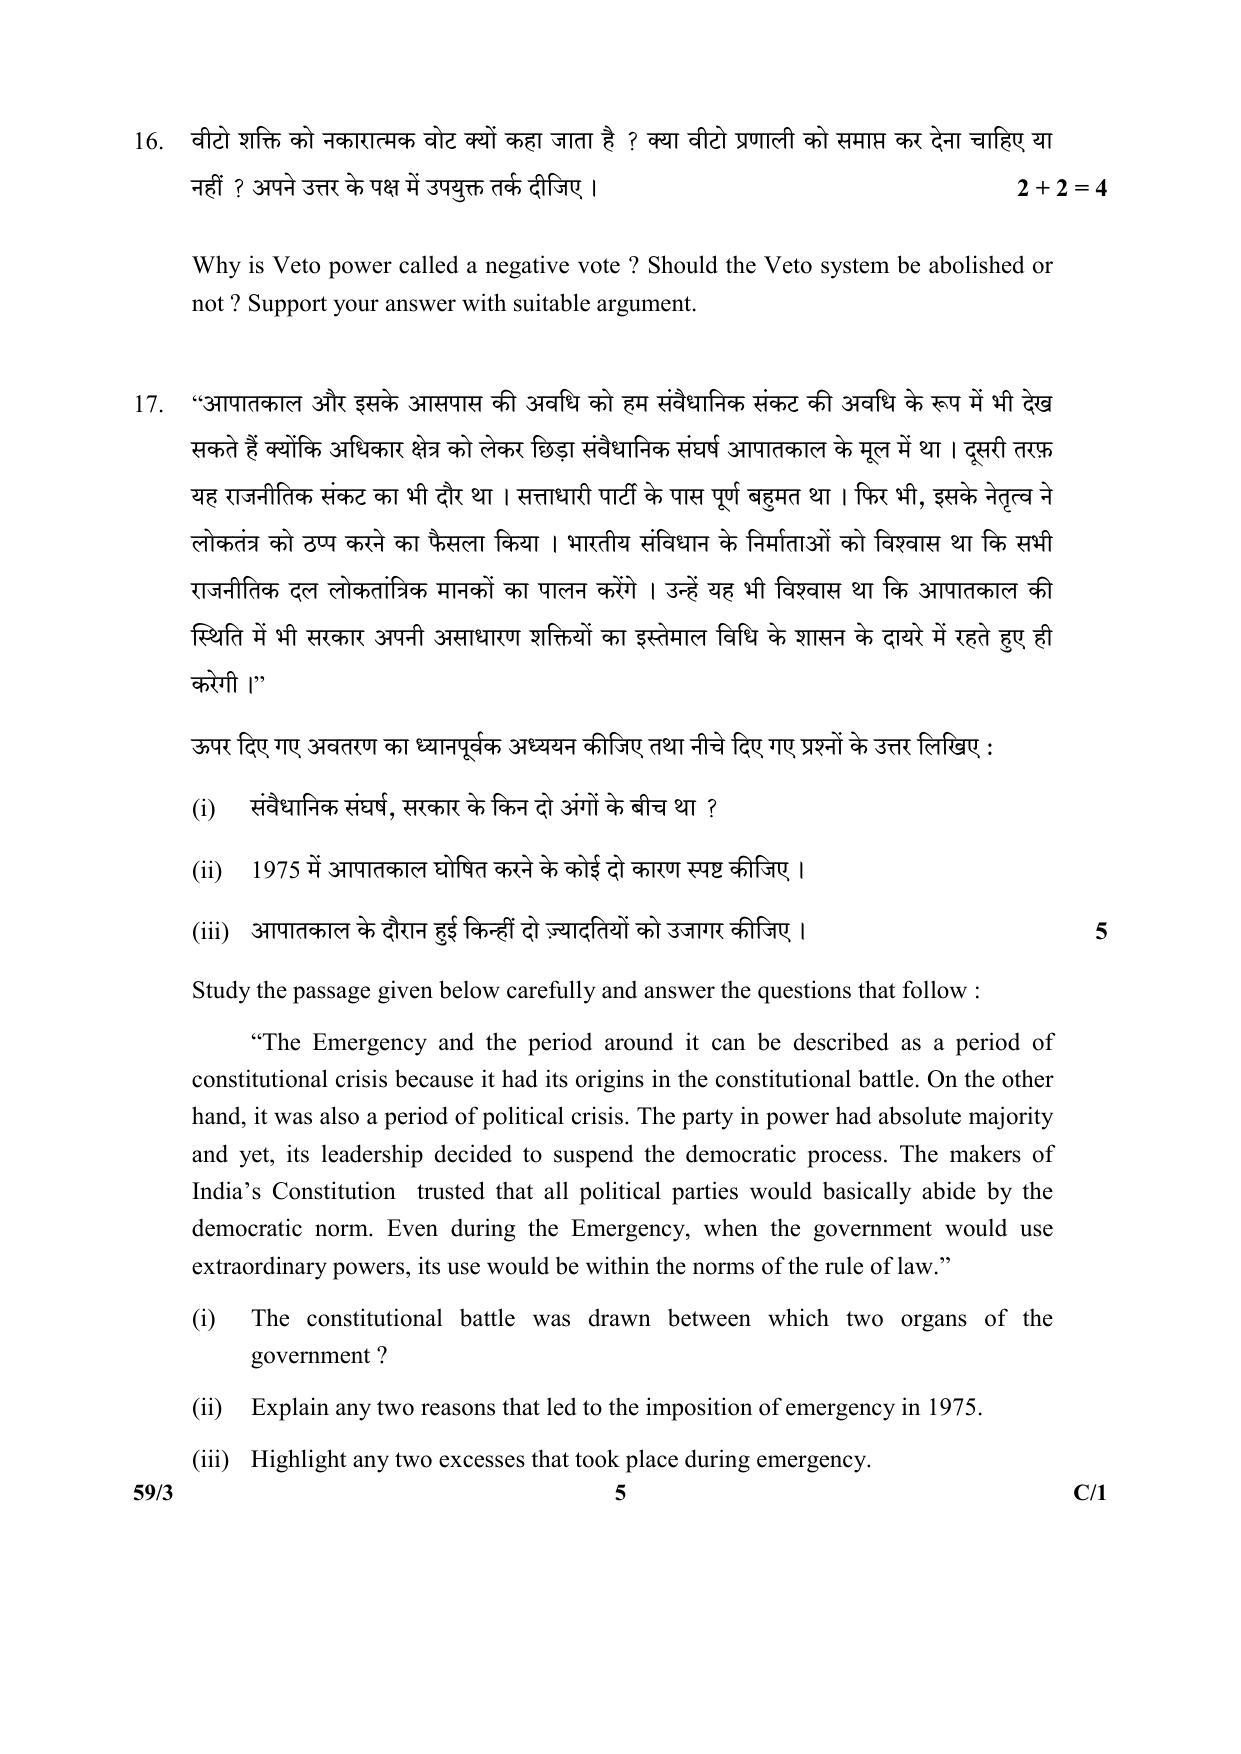 CBSE Class 12 221-3 Political Science_Punjabi 2018 Compartment Question Paper - Page 13